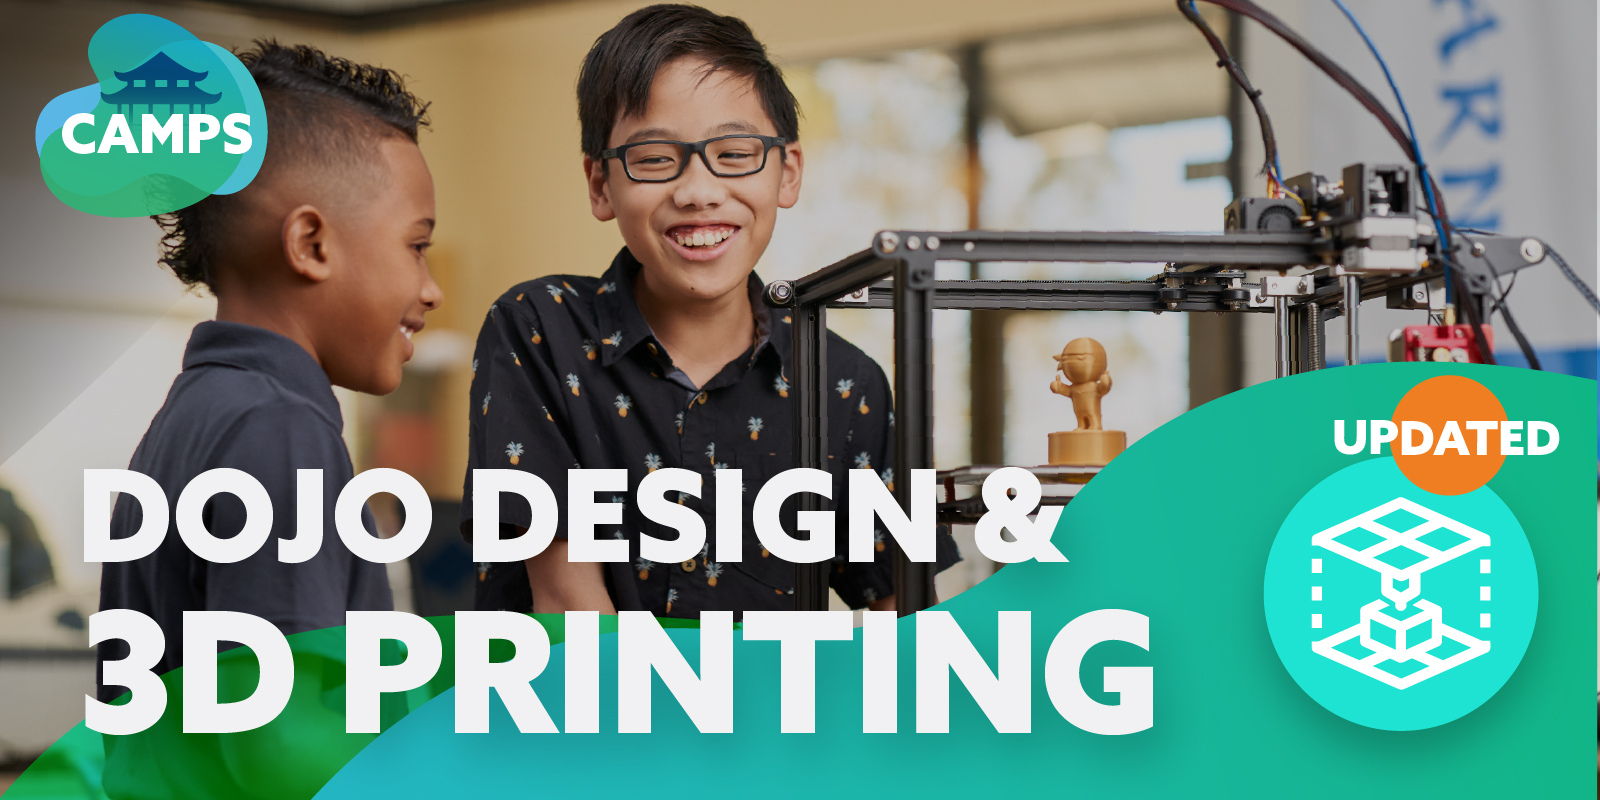 Dojo Design and 3D Printing promotional image